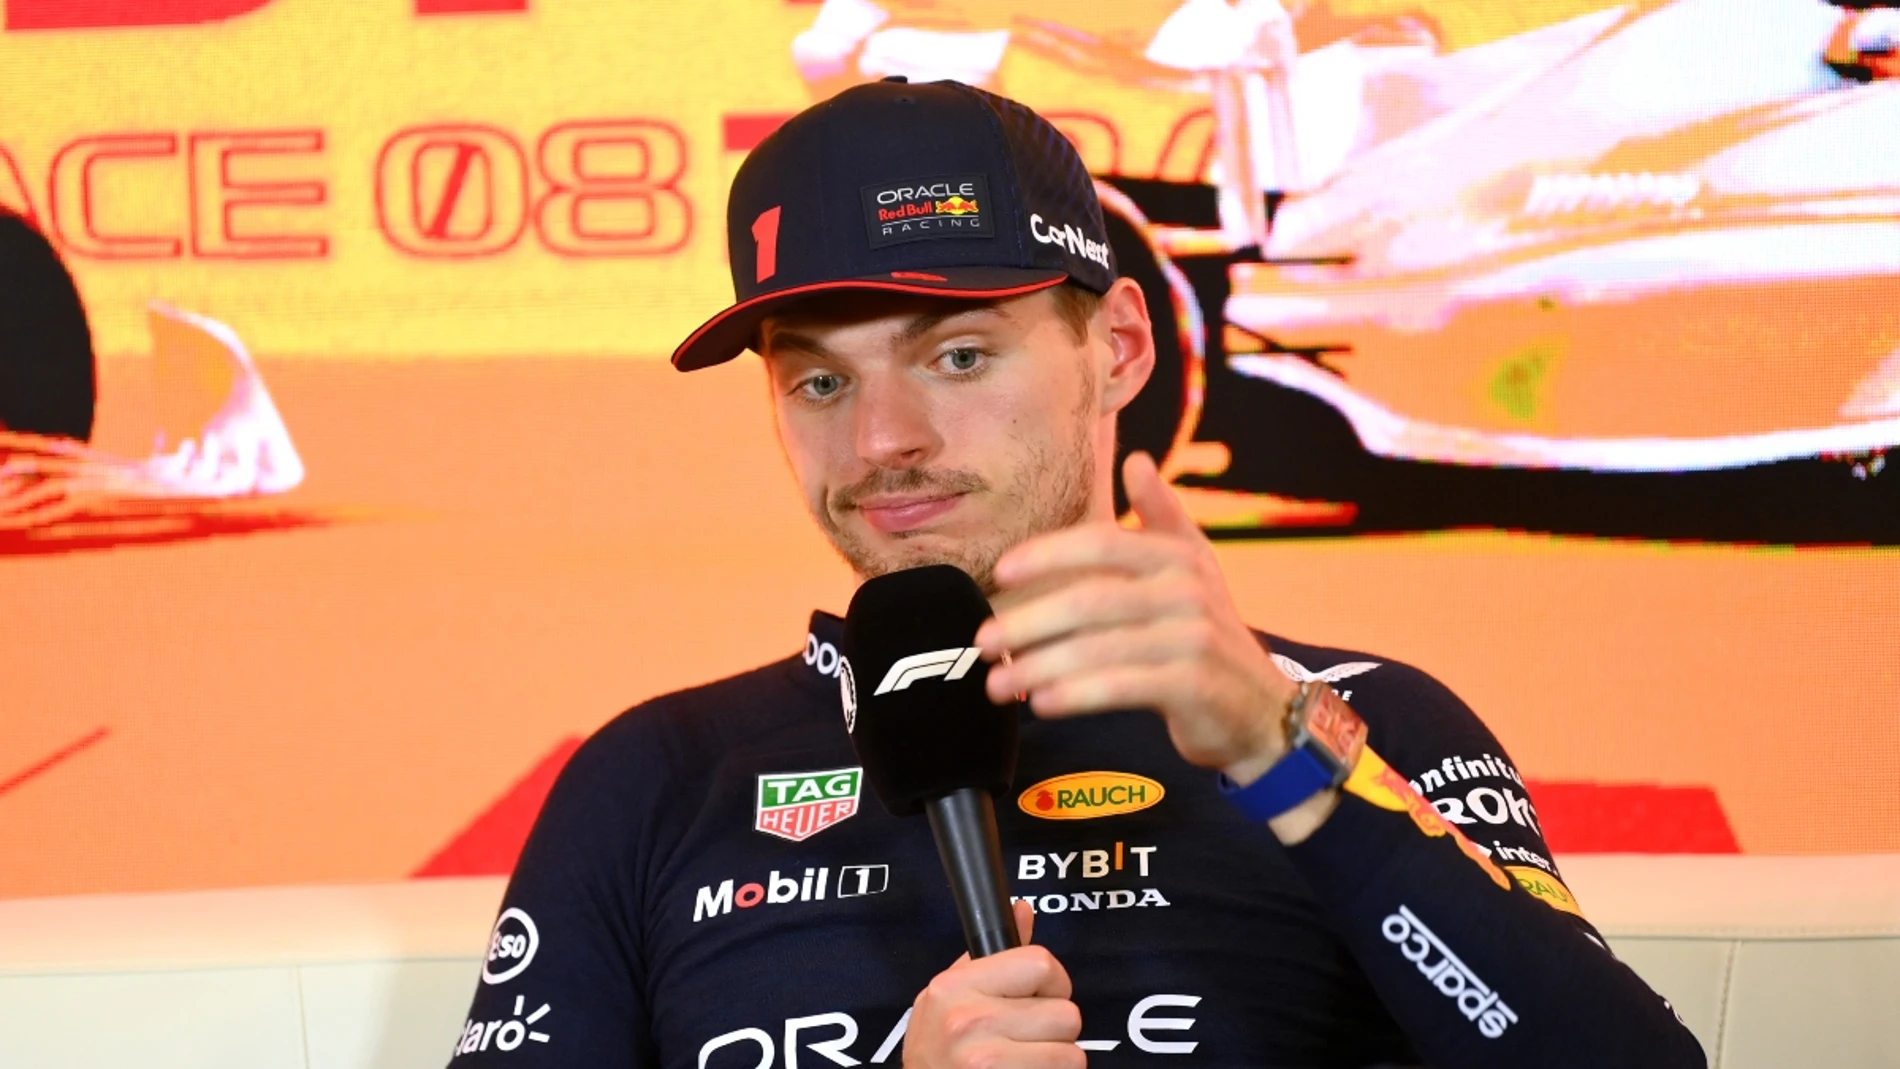 Max Verstappen, piloto de Red Bull